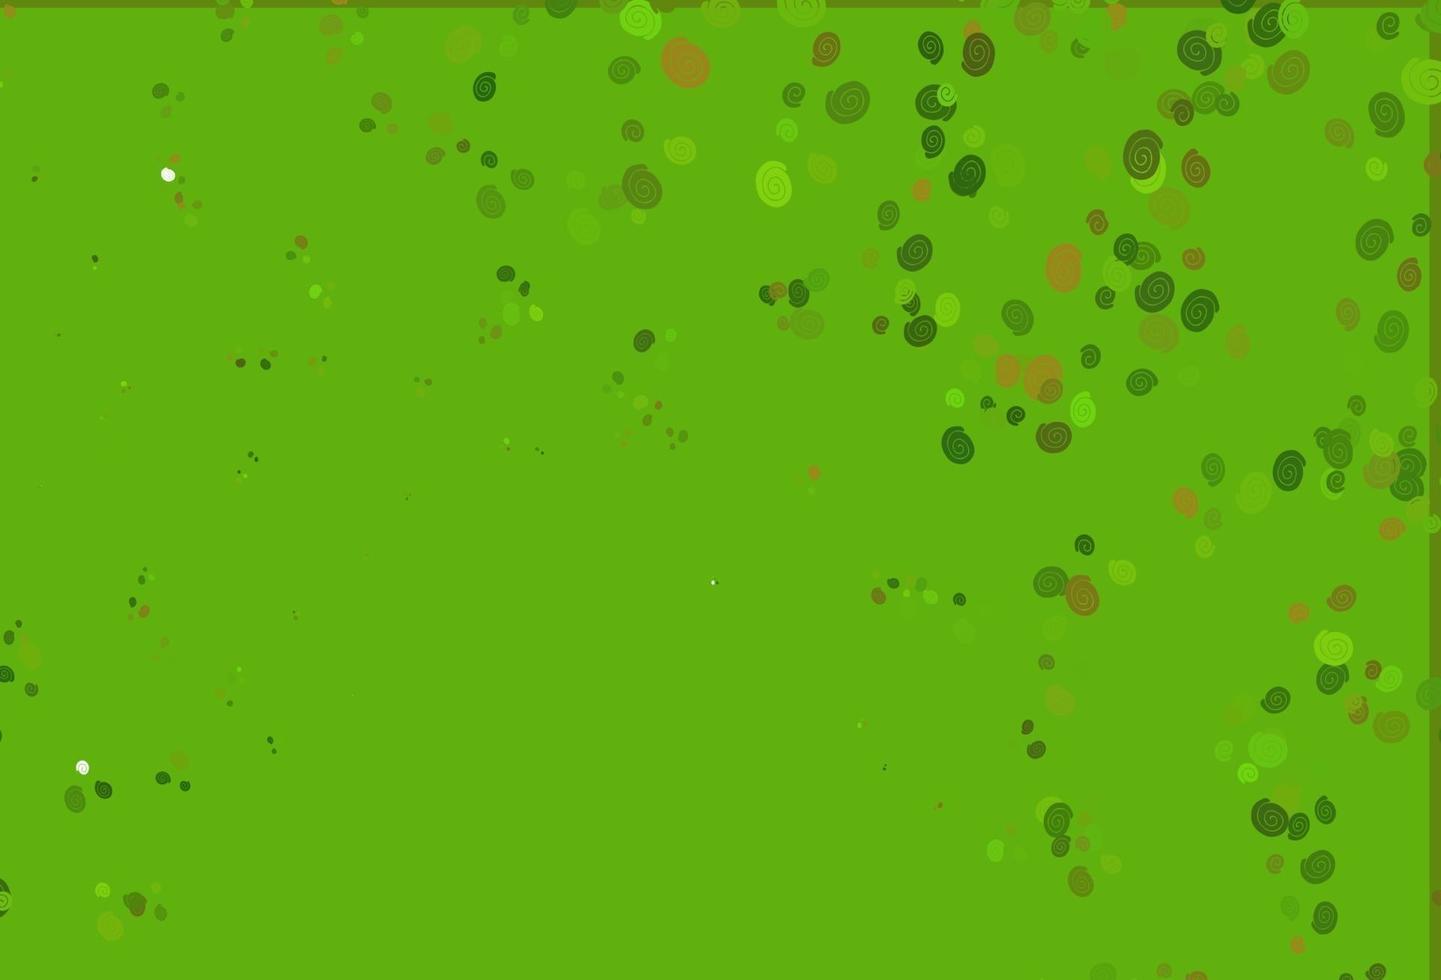 motif vectoriel vert clair avec des formes liquides.